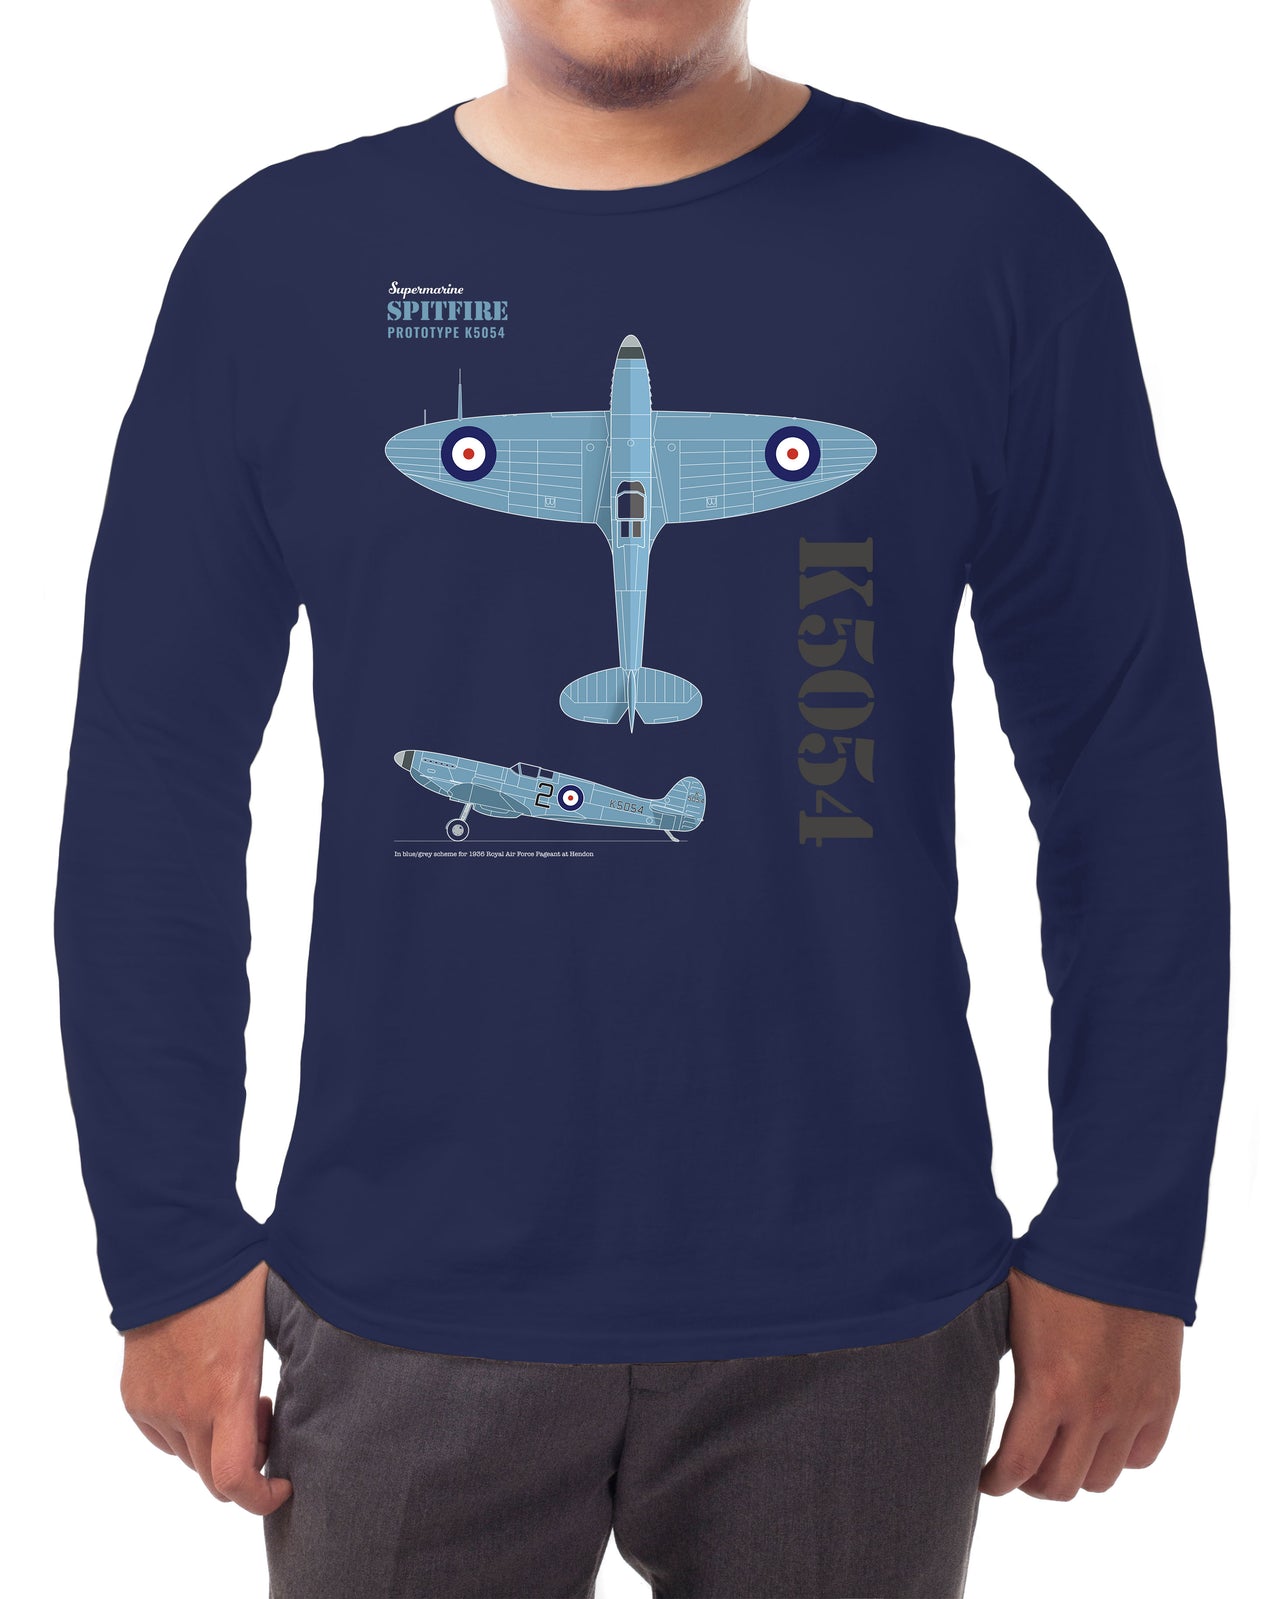 Spitfire Prototype K5054 - Long-sleeve T-shirt